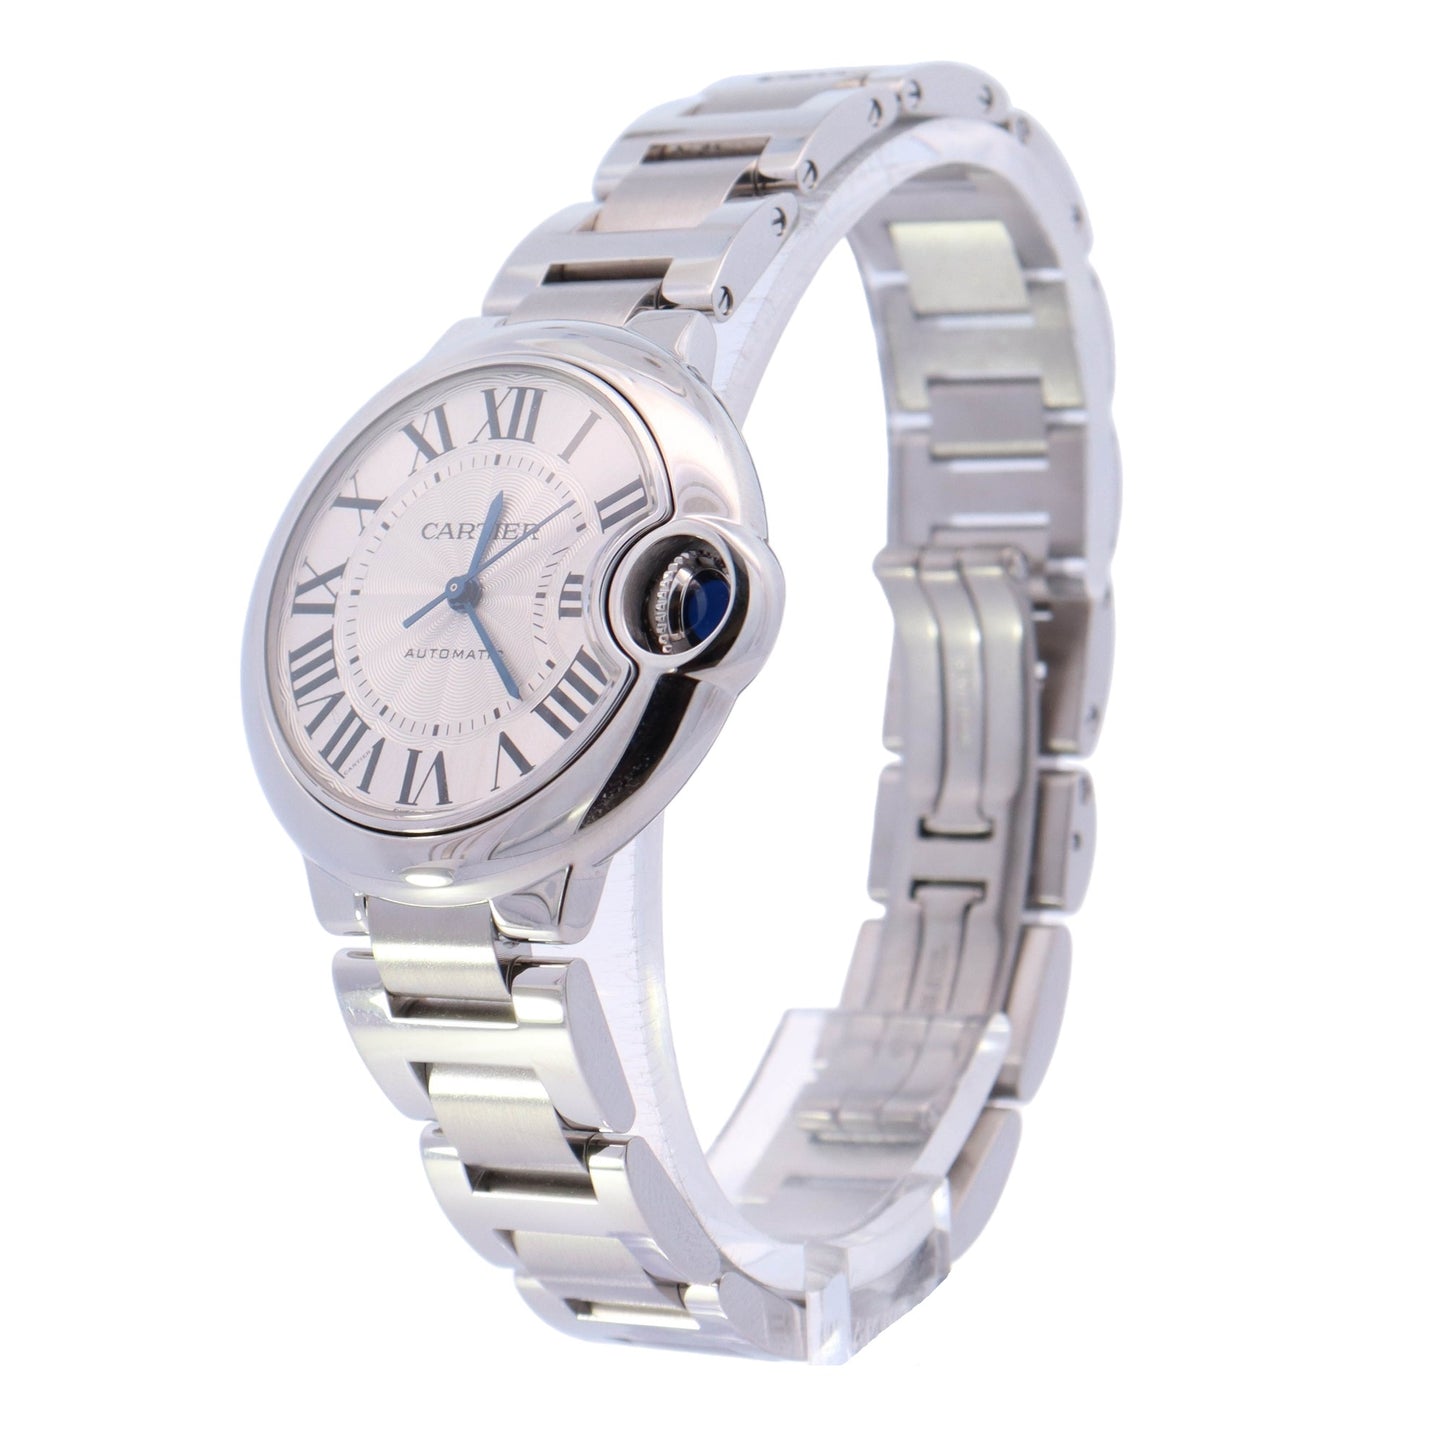 Cartier Ballon Bleu Stainless Steel 33mm White Roman Dial Watch Reference # W6920071